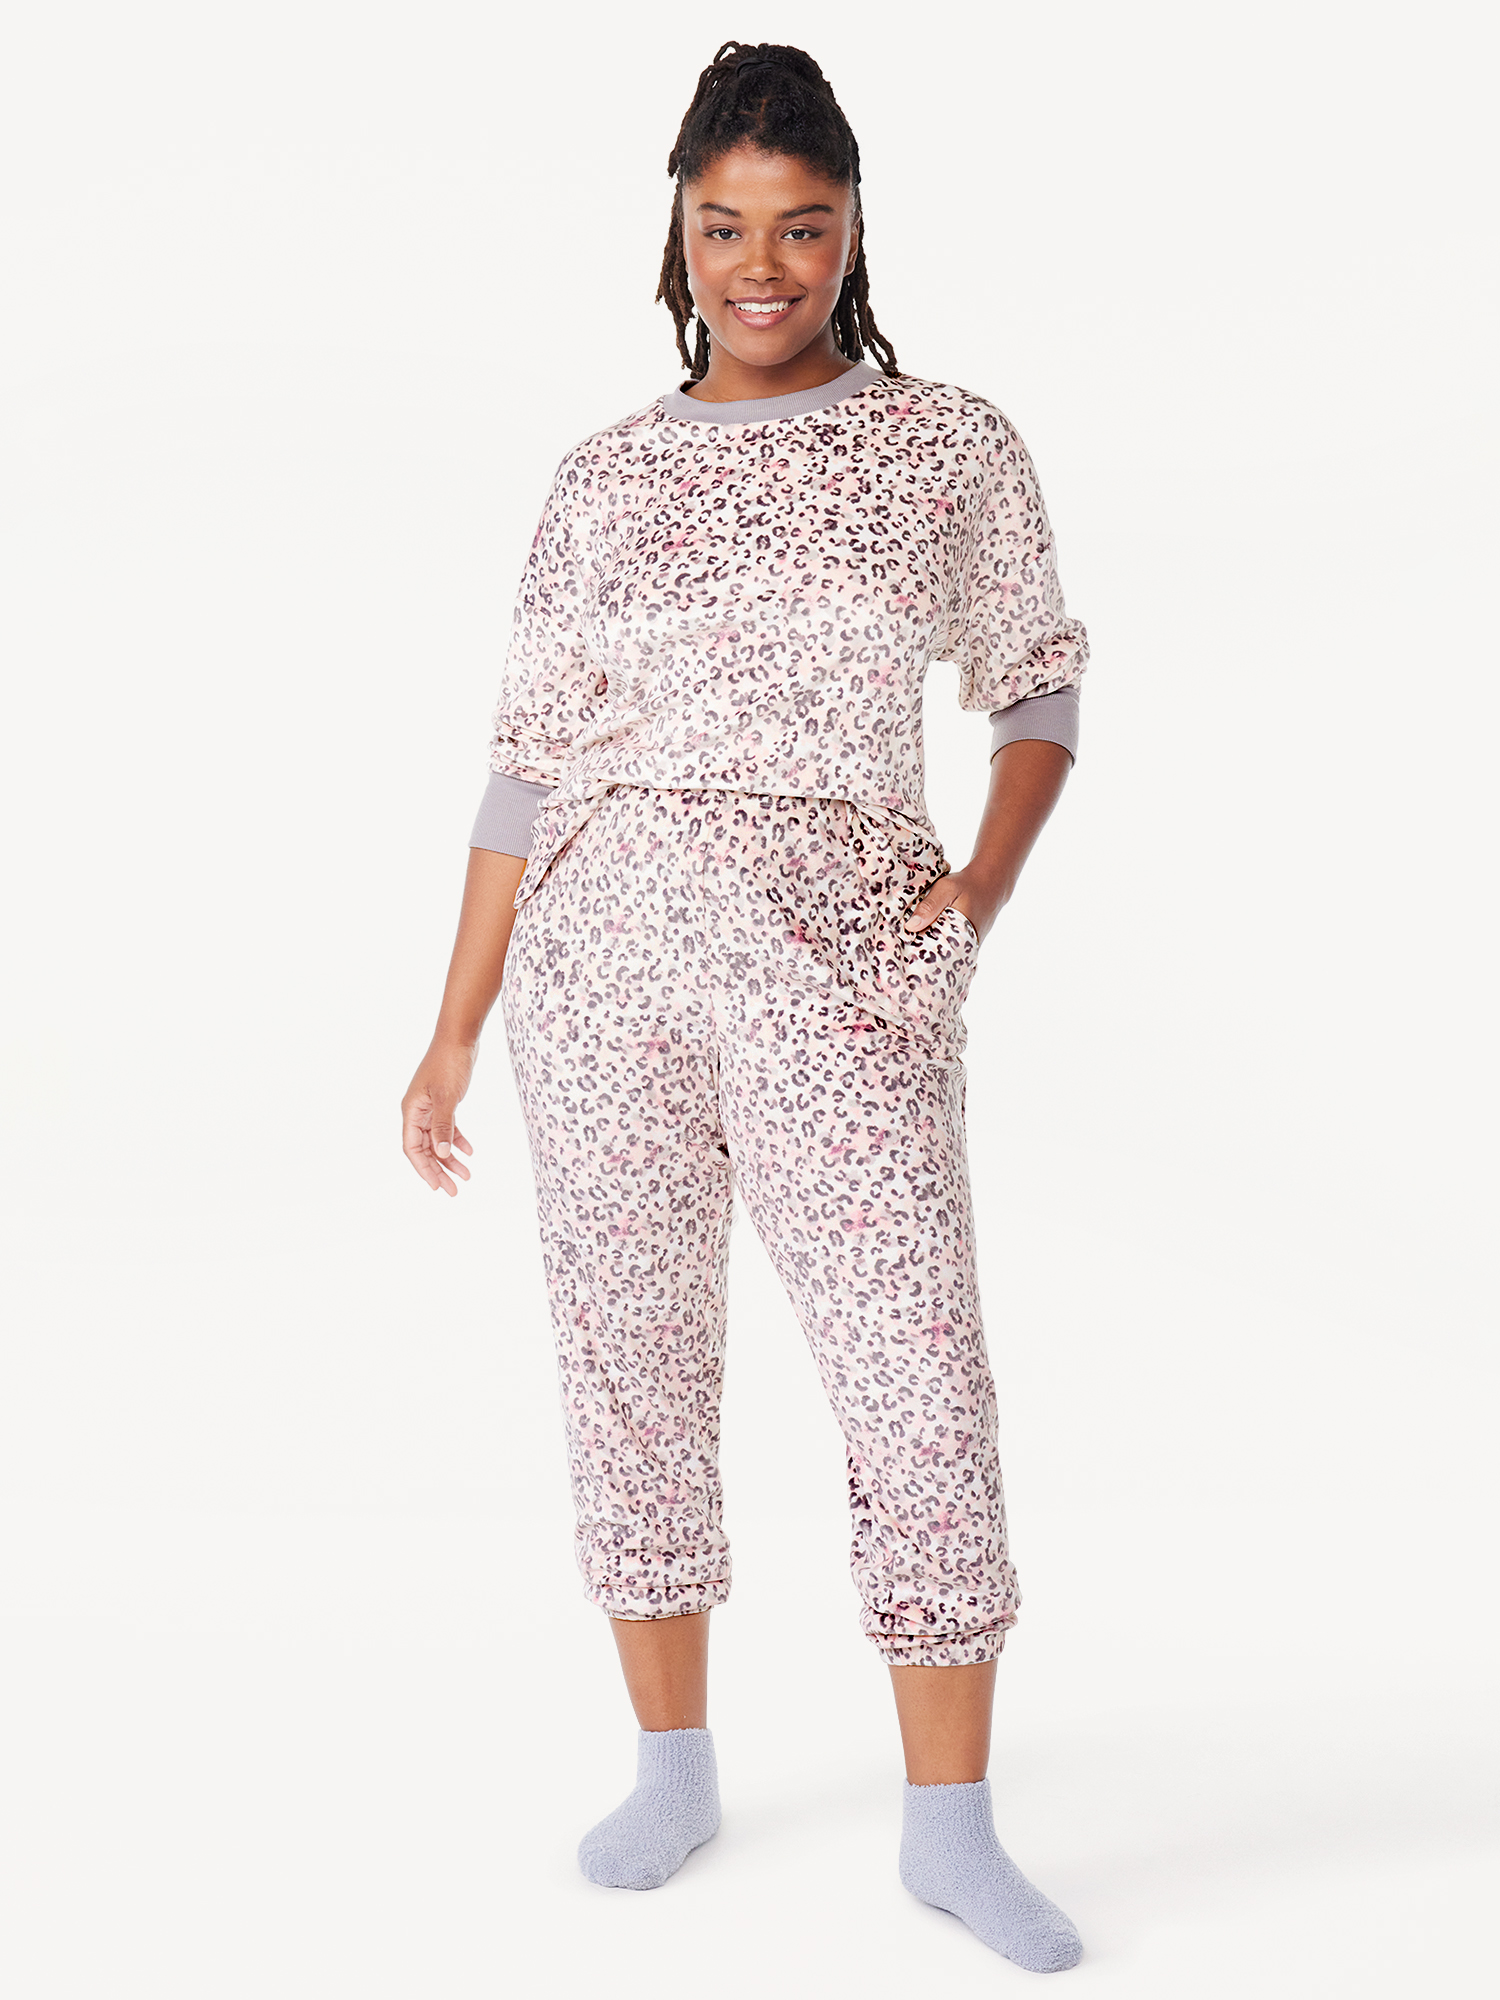 Joyspun Women's Stretch Velour Top and Pants Pajama Set with Socks, 3 ...